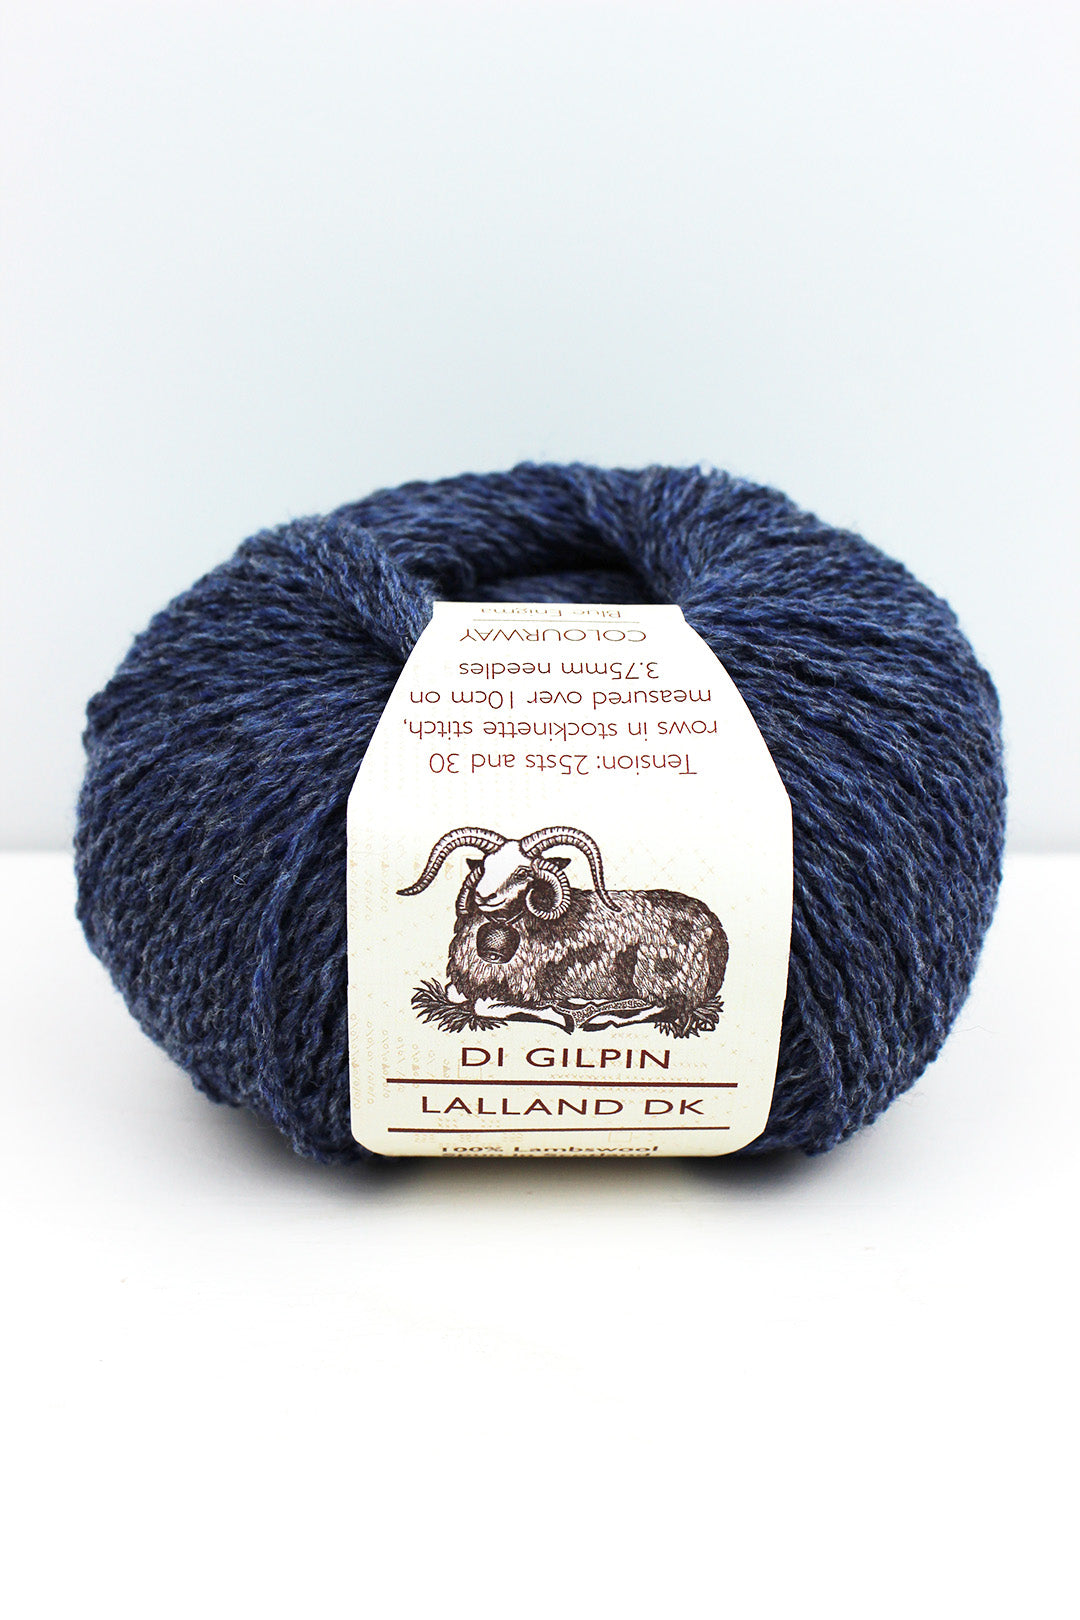 Di Gilpin yarn Blue Enigma. Scottish Textiles Showcase